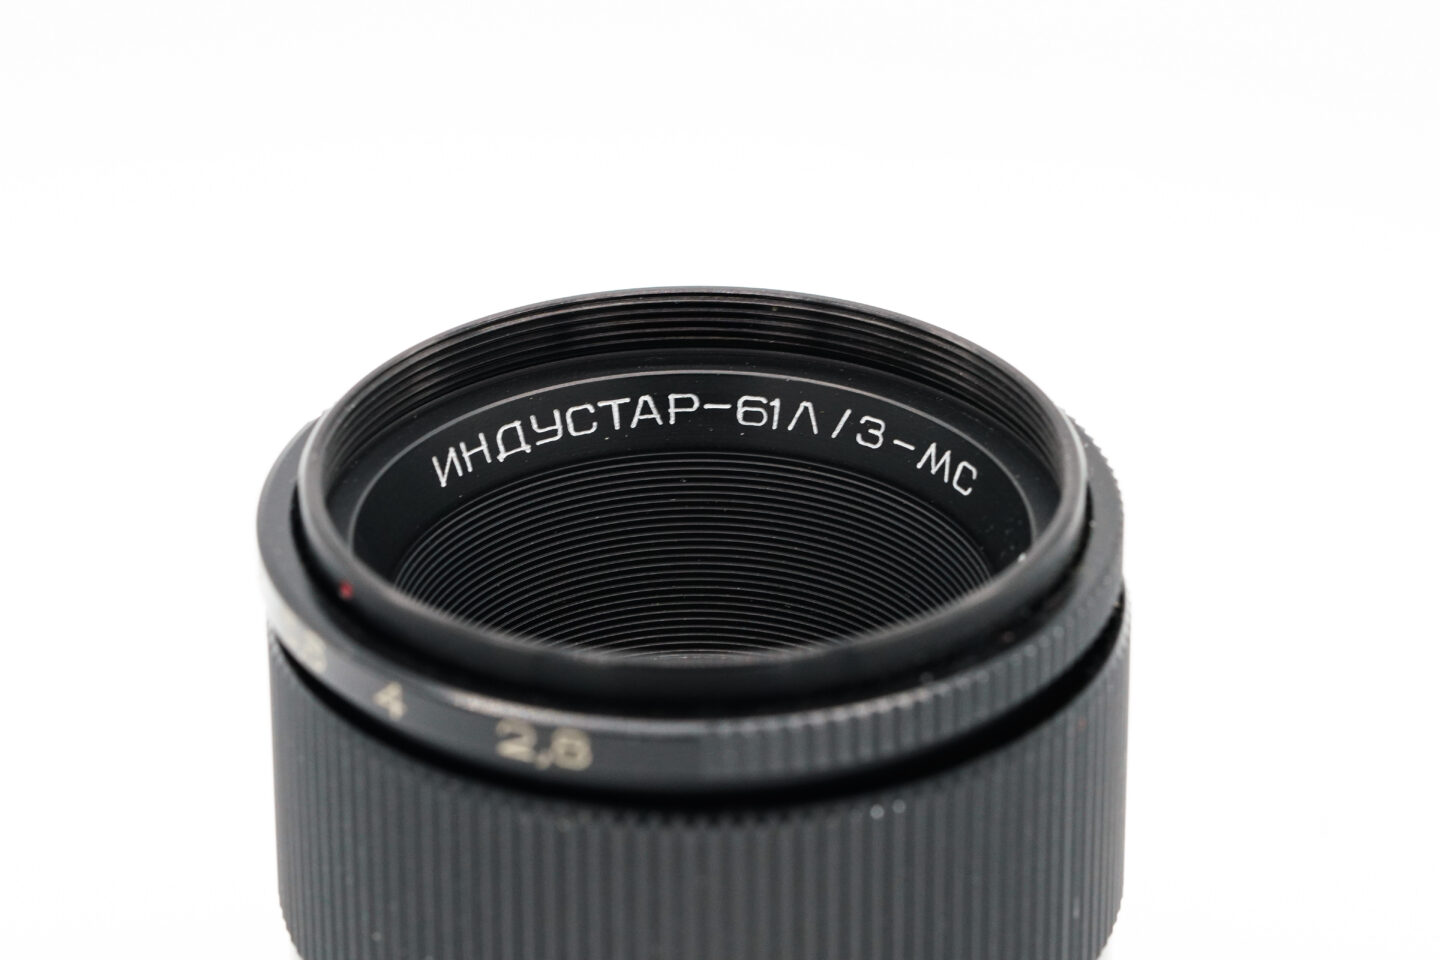 Industar-61 L Z 50mm Nikon Lens ロシア製-